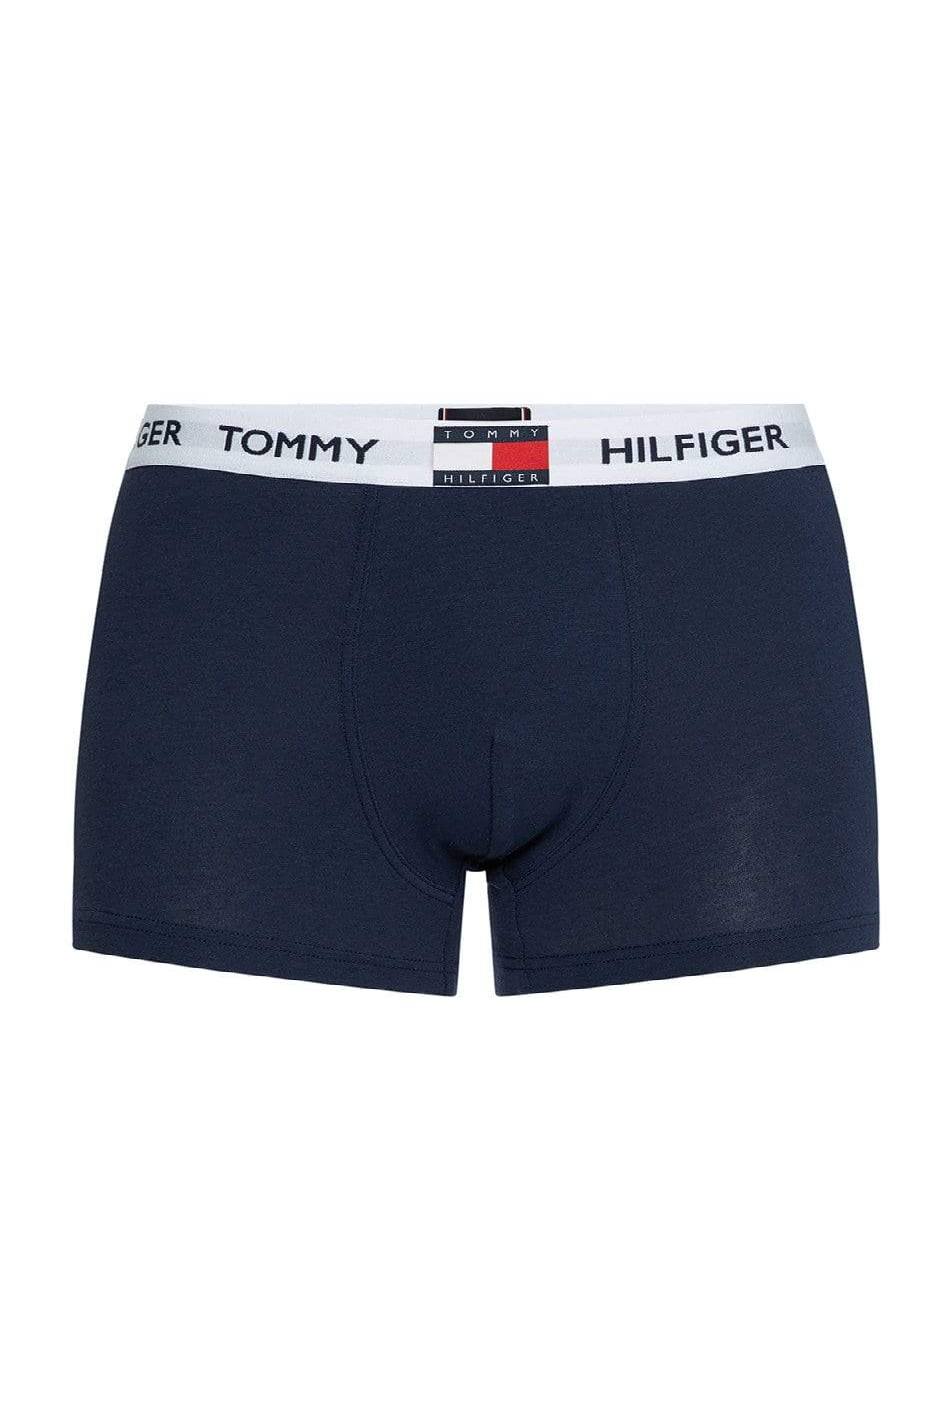 Tommy Hilfiger Tommy 85 Cotton Men's Trunk Boxers